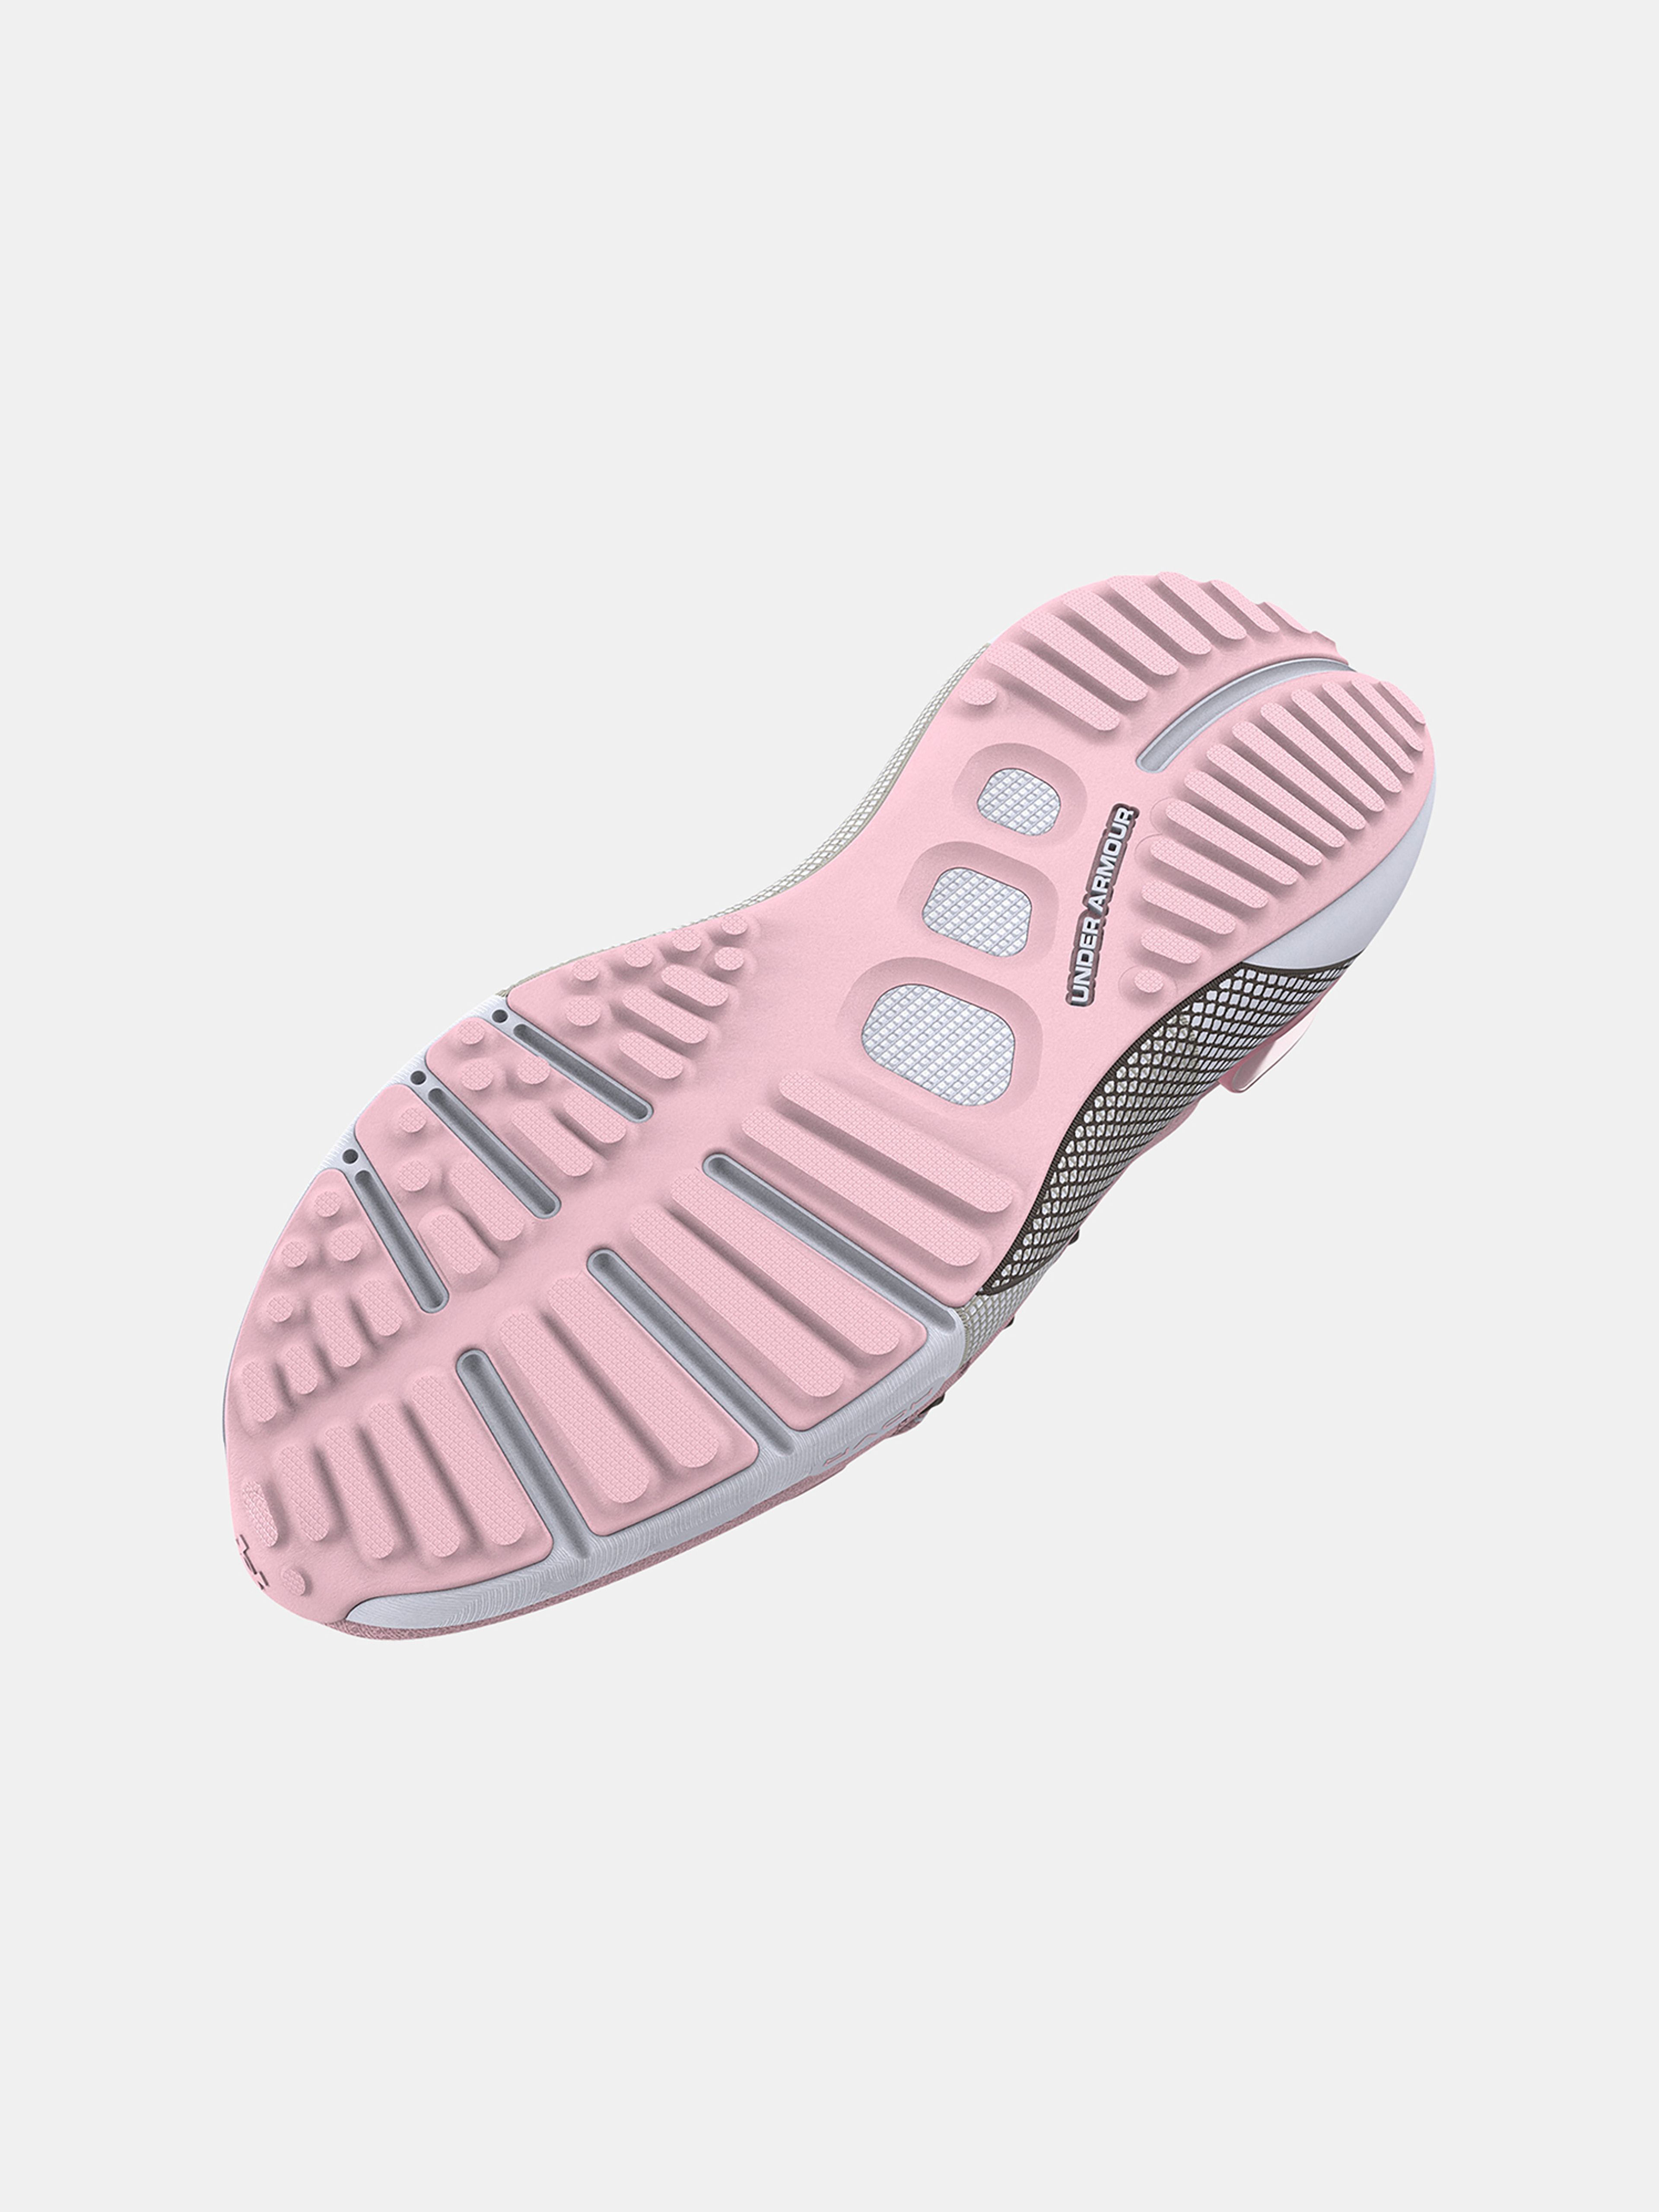  W HOVR Phantom 3-GRN - women's running shoes - UNDER ARMOUR  - 119.92 € - outdoorové oblečení a vybavení shop